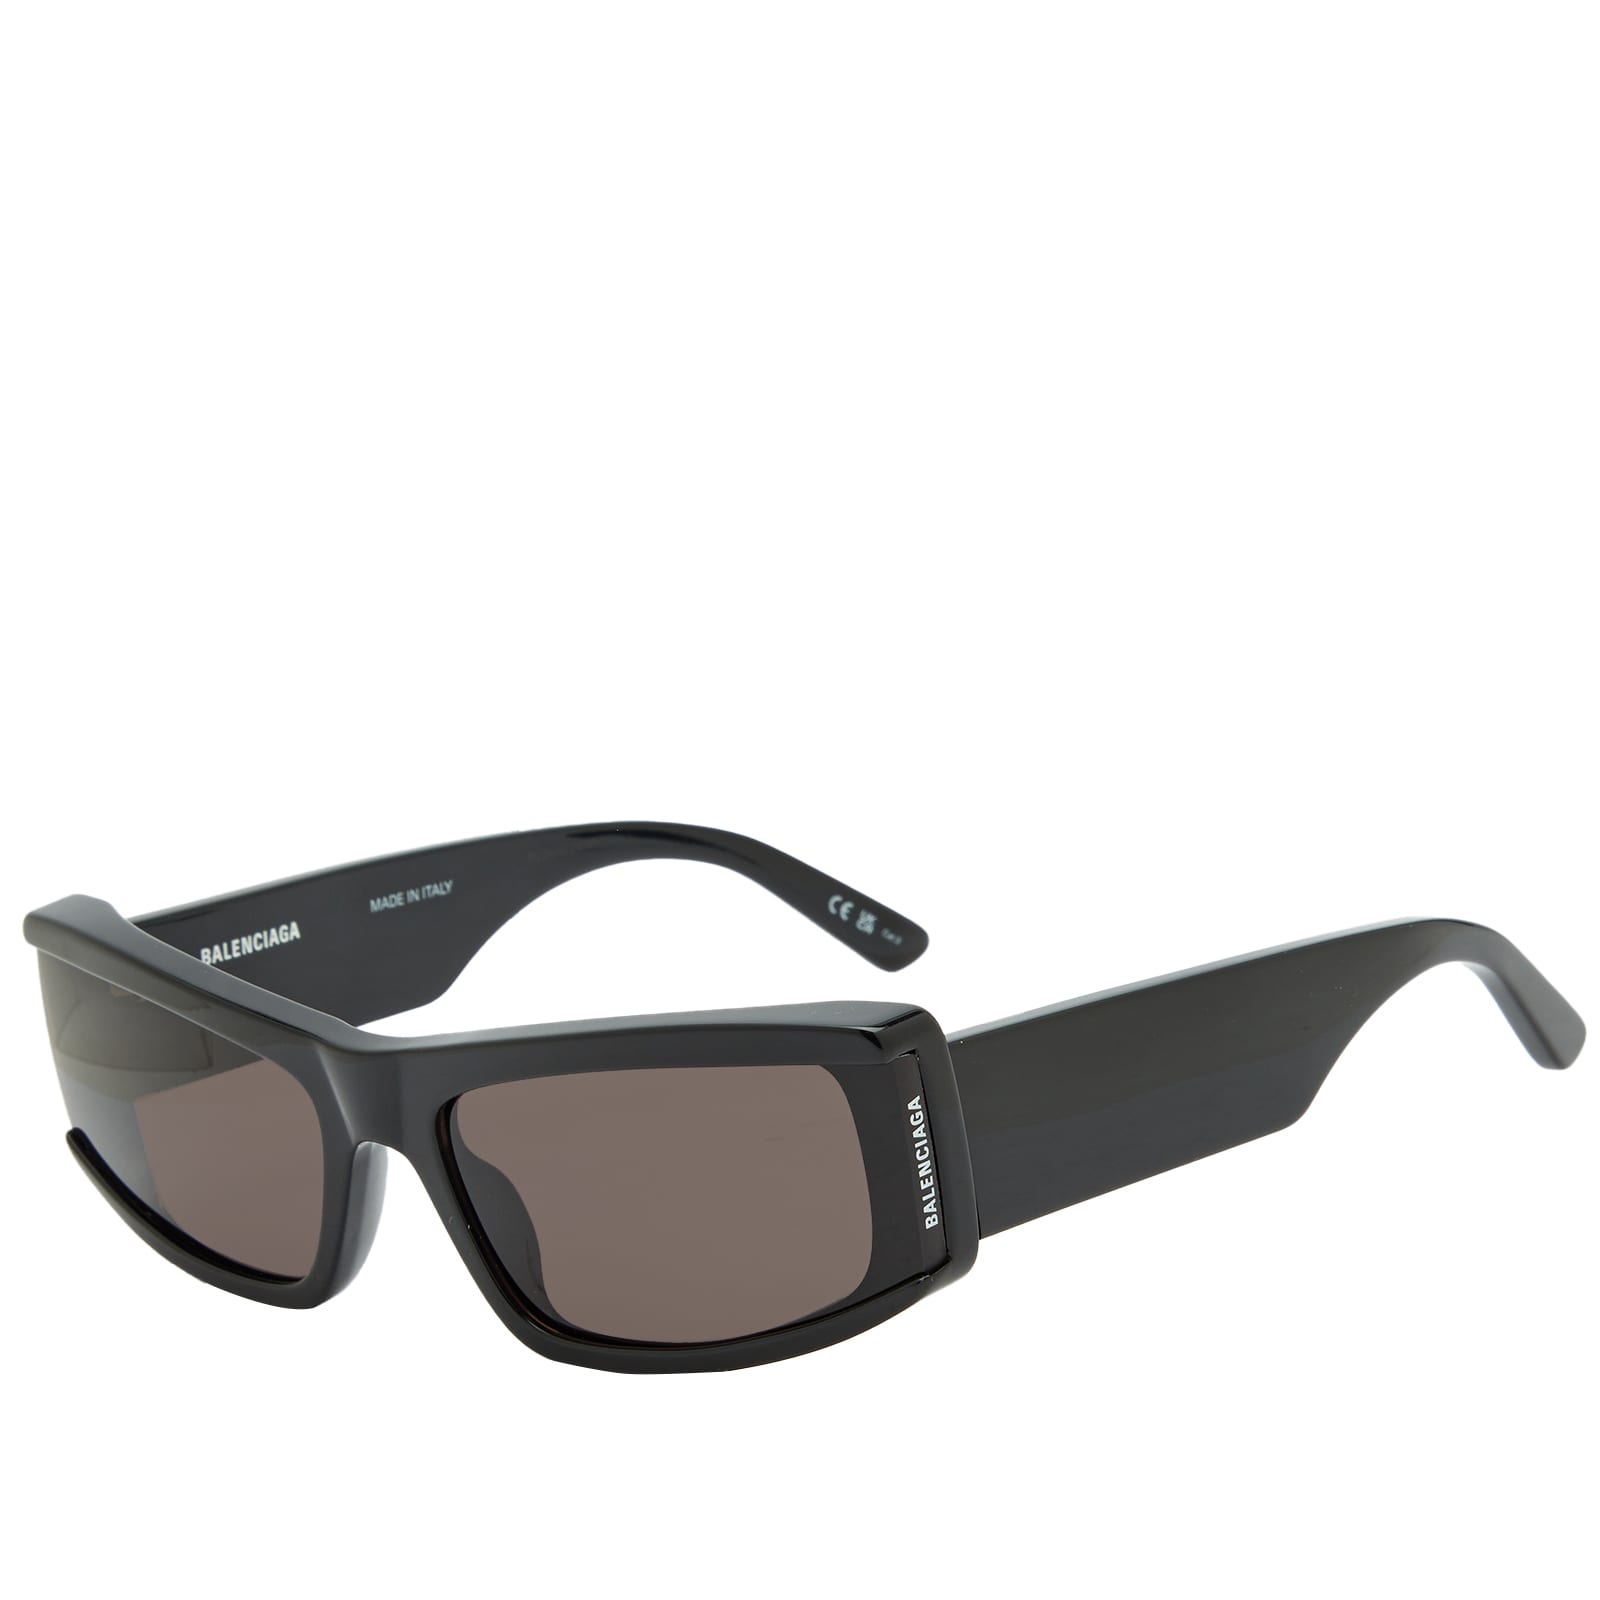 цена Солнцезащитные очки Balenciaga Eyewear Bb0305S, цвет Black & Grey